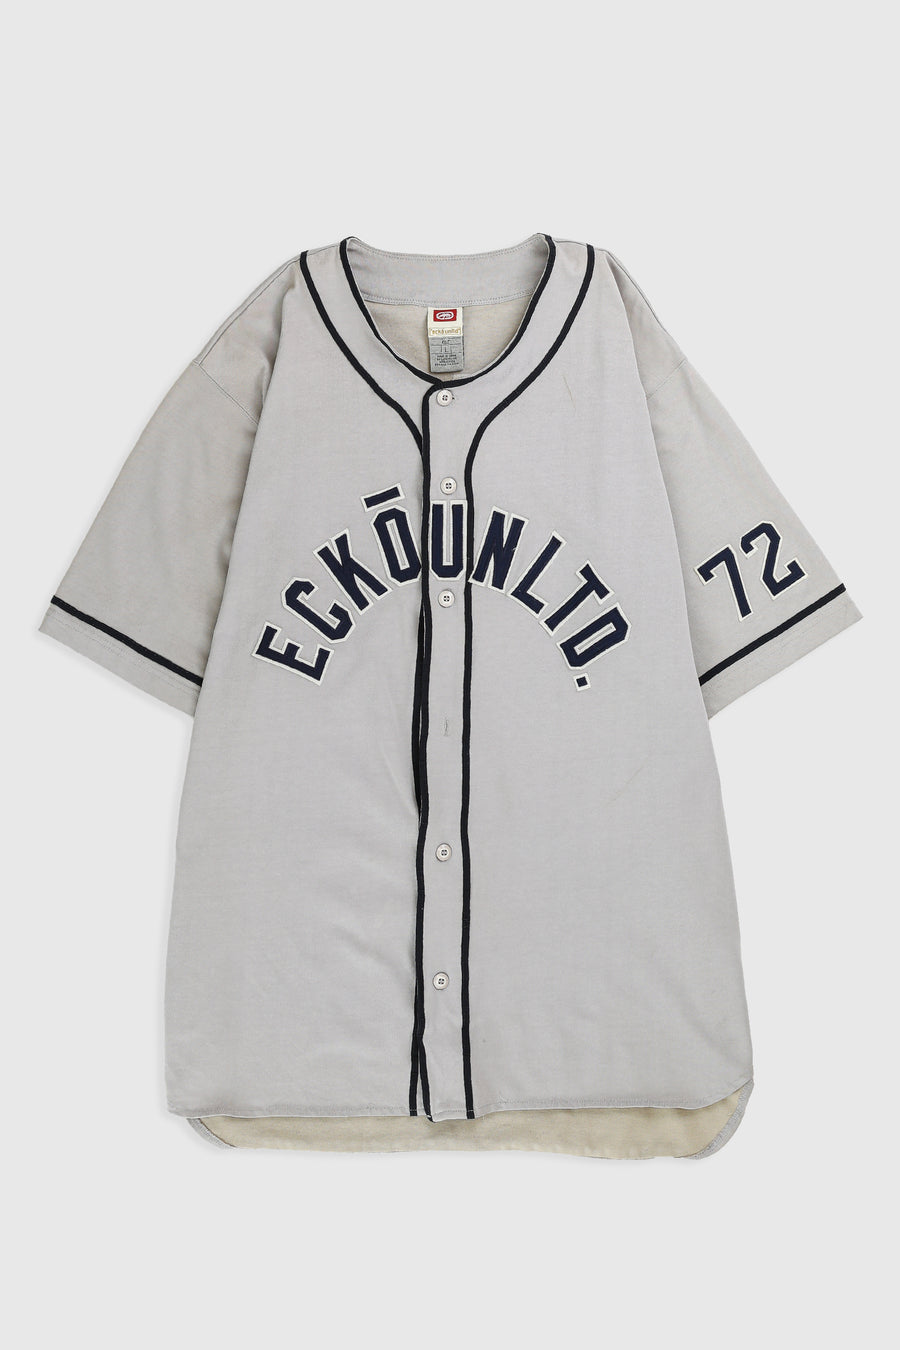 Vintage Ecko Baseball Jersey - L